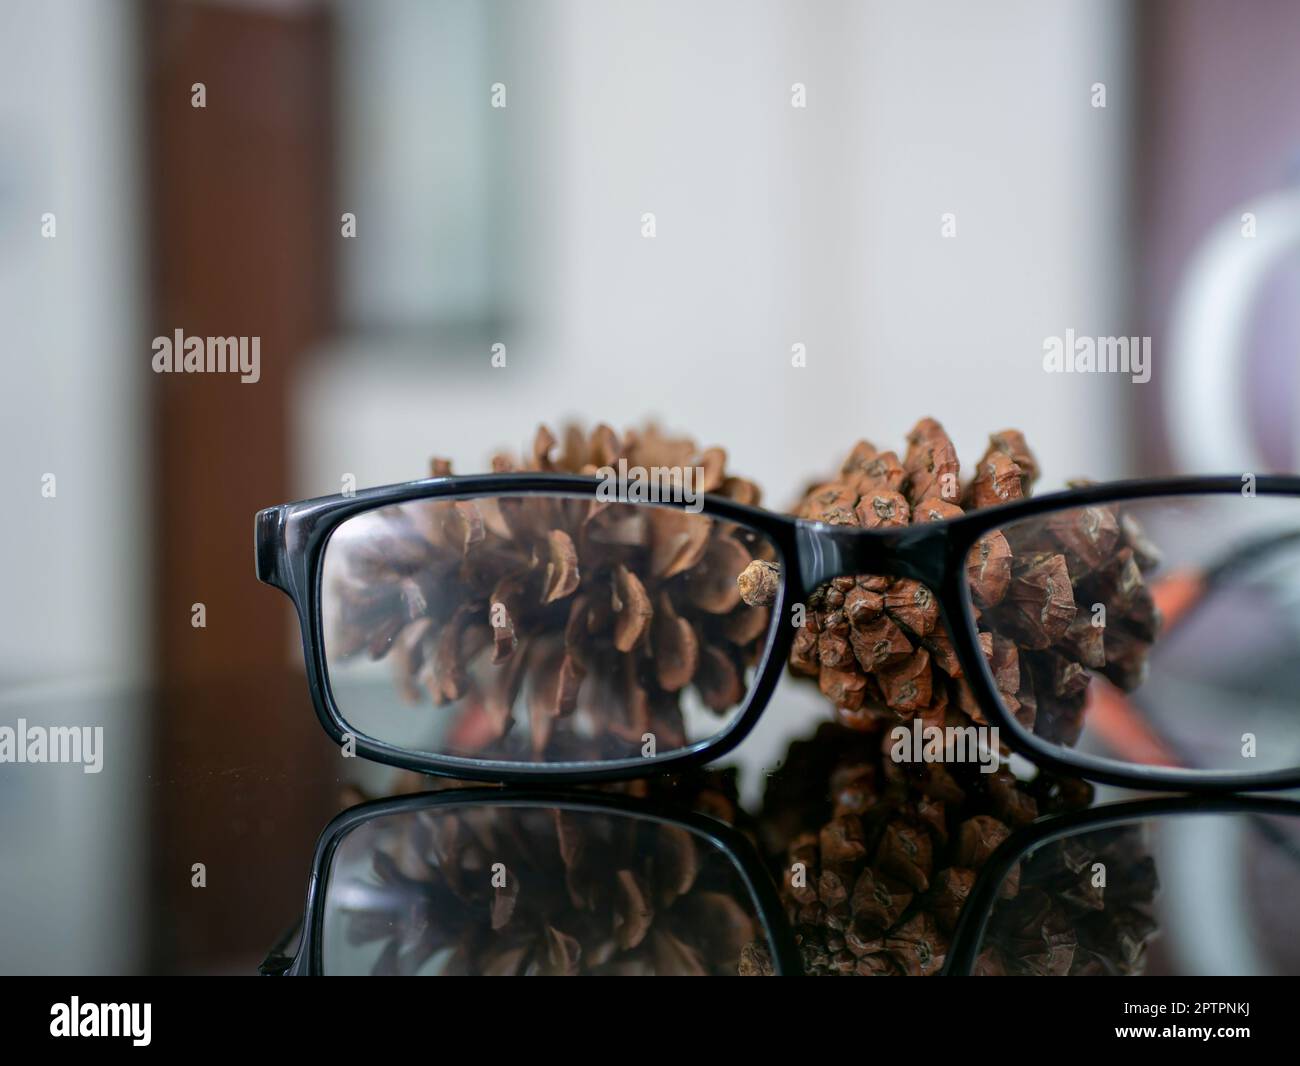 Reading glasses and dried pine cones, Pinus merkusii seeds, shallow focus Stock Photo